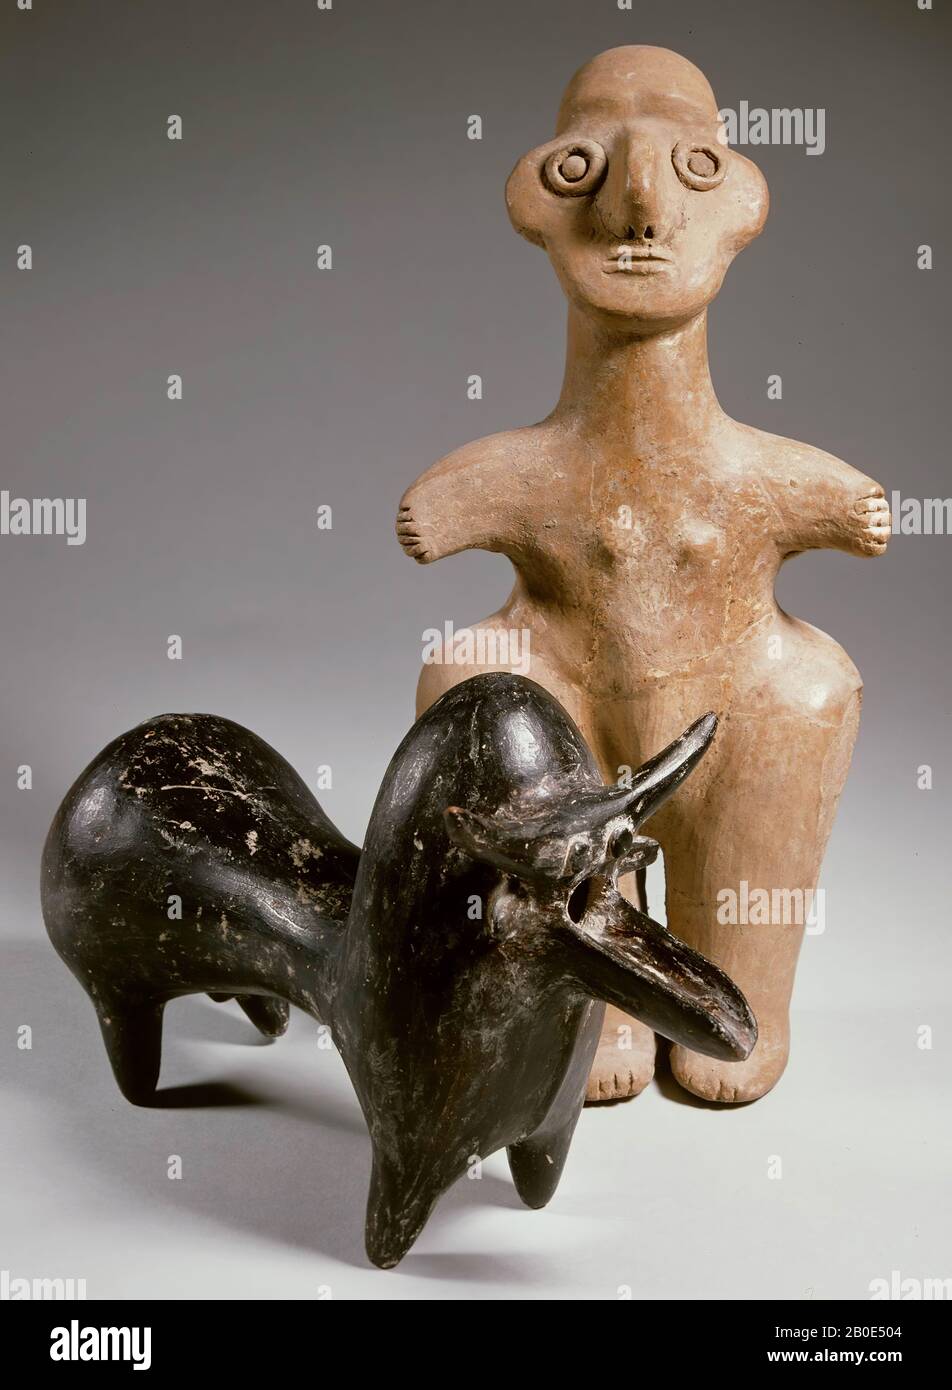 Ancient Near East, figurine, earthenware, L 10.6 cm, W 16.5 cm, H 35.4 cm, Iron Age II 1000-800 BC, Iran Stock Photo